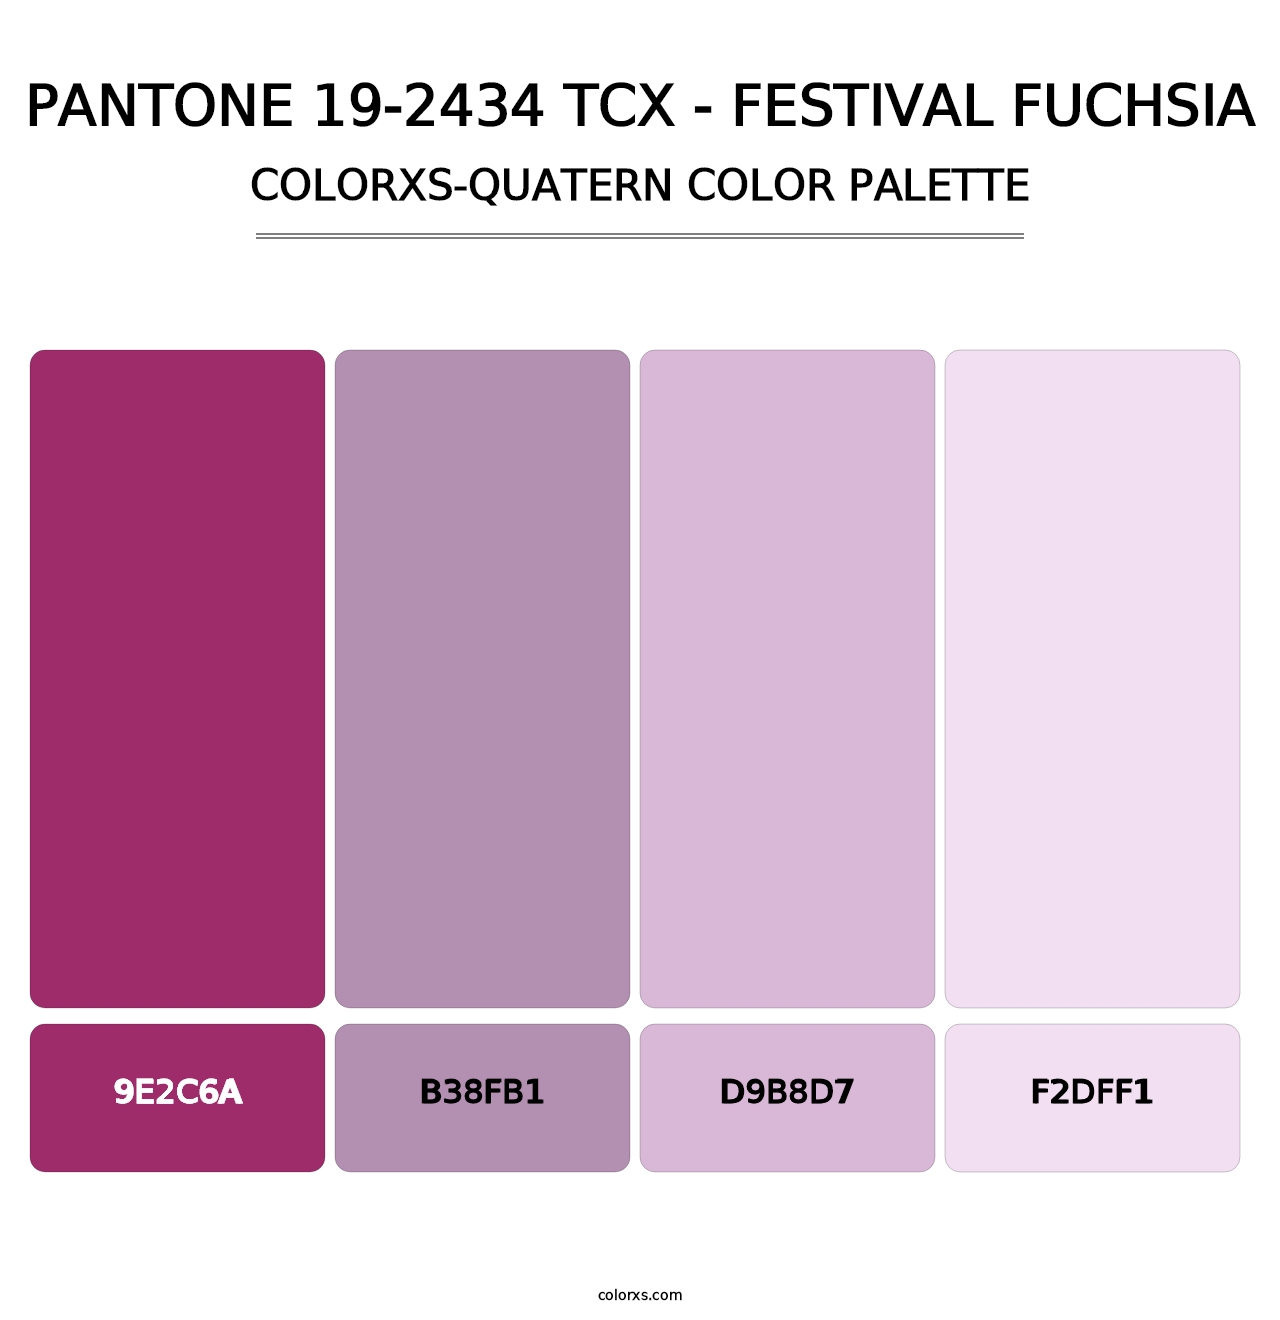 PANTONE 19-2434 TCX - Festival Fuchsia - Colorxs Quatern Palette